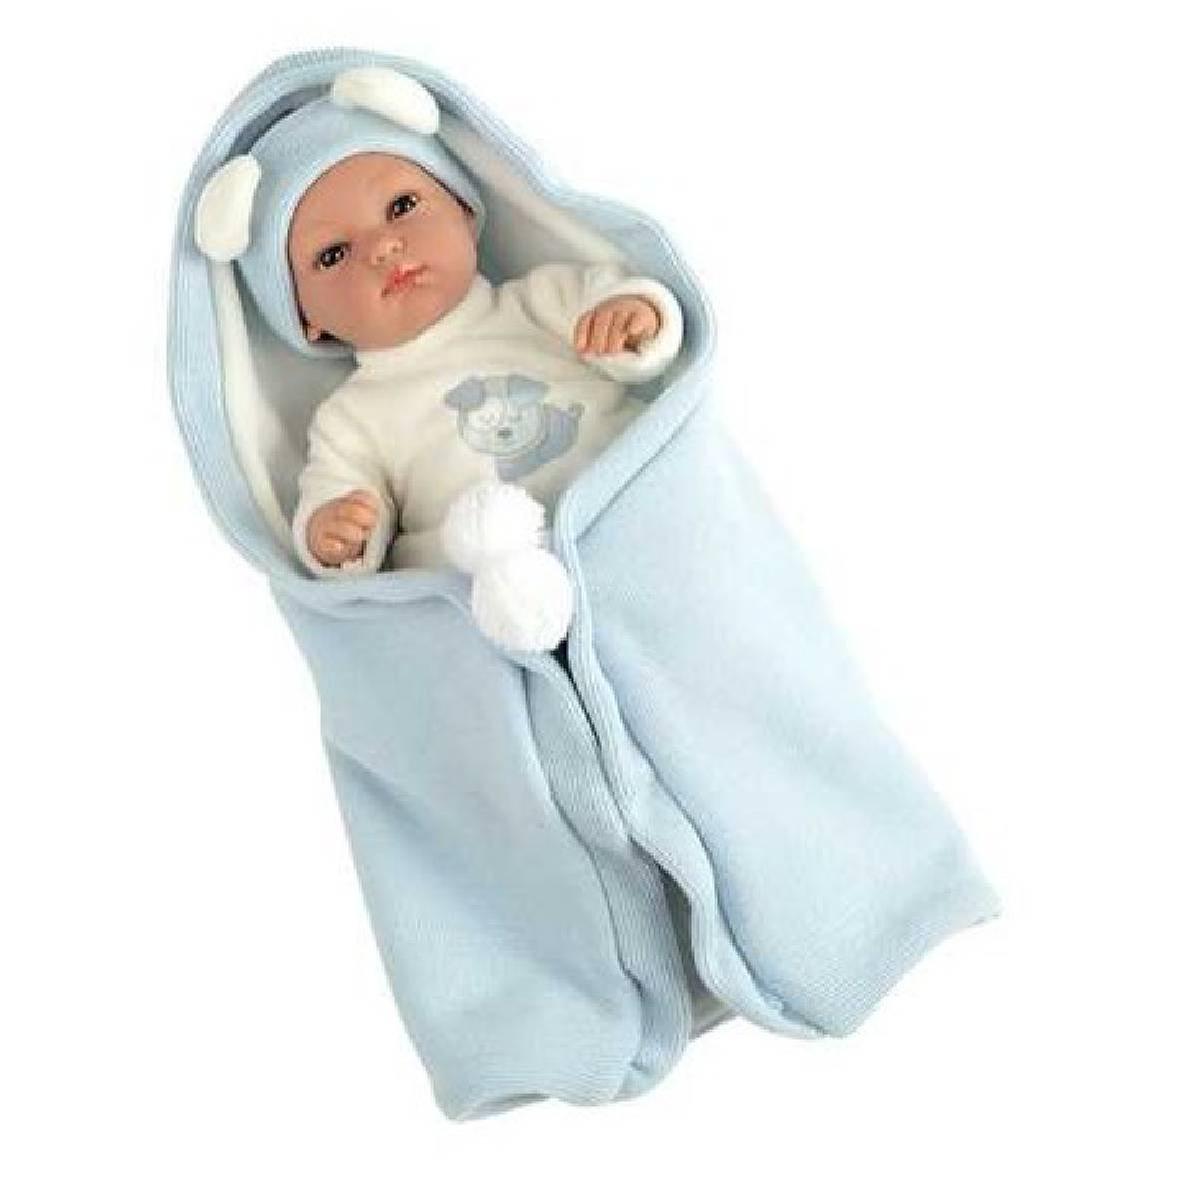 Comprar Roupa sortida Elegance para boneca bebé de 33 cm de Arias